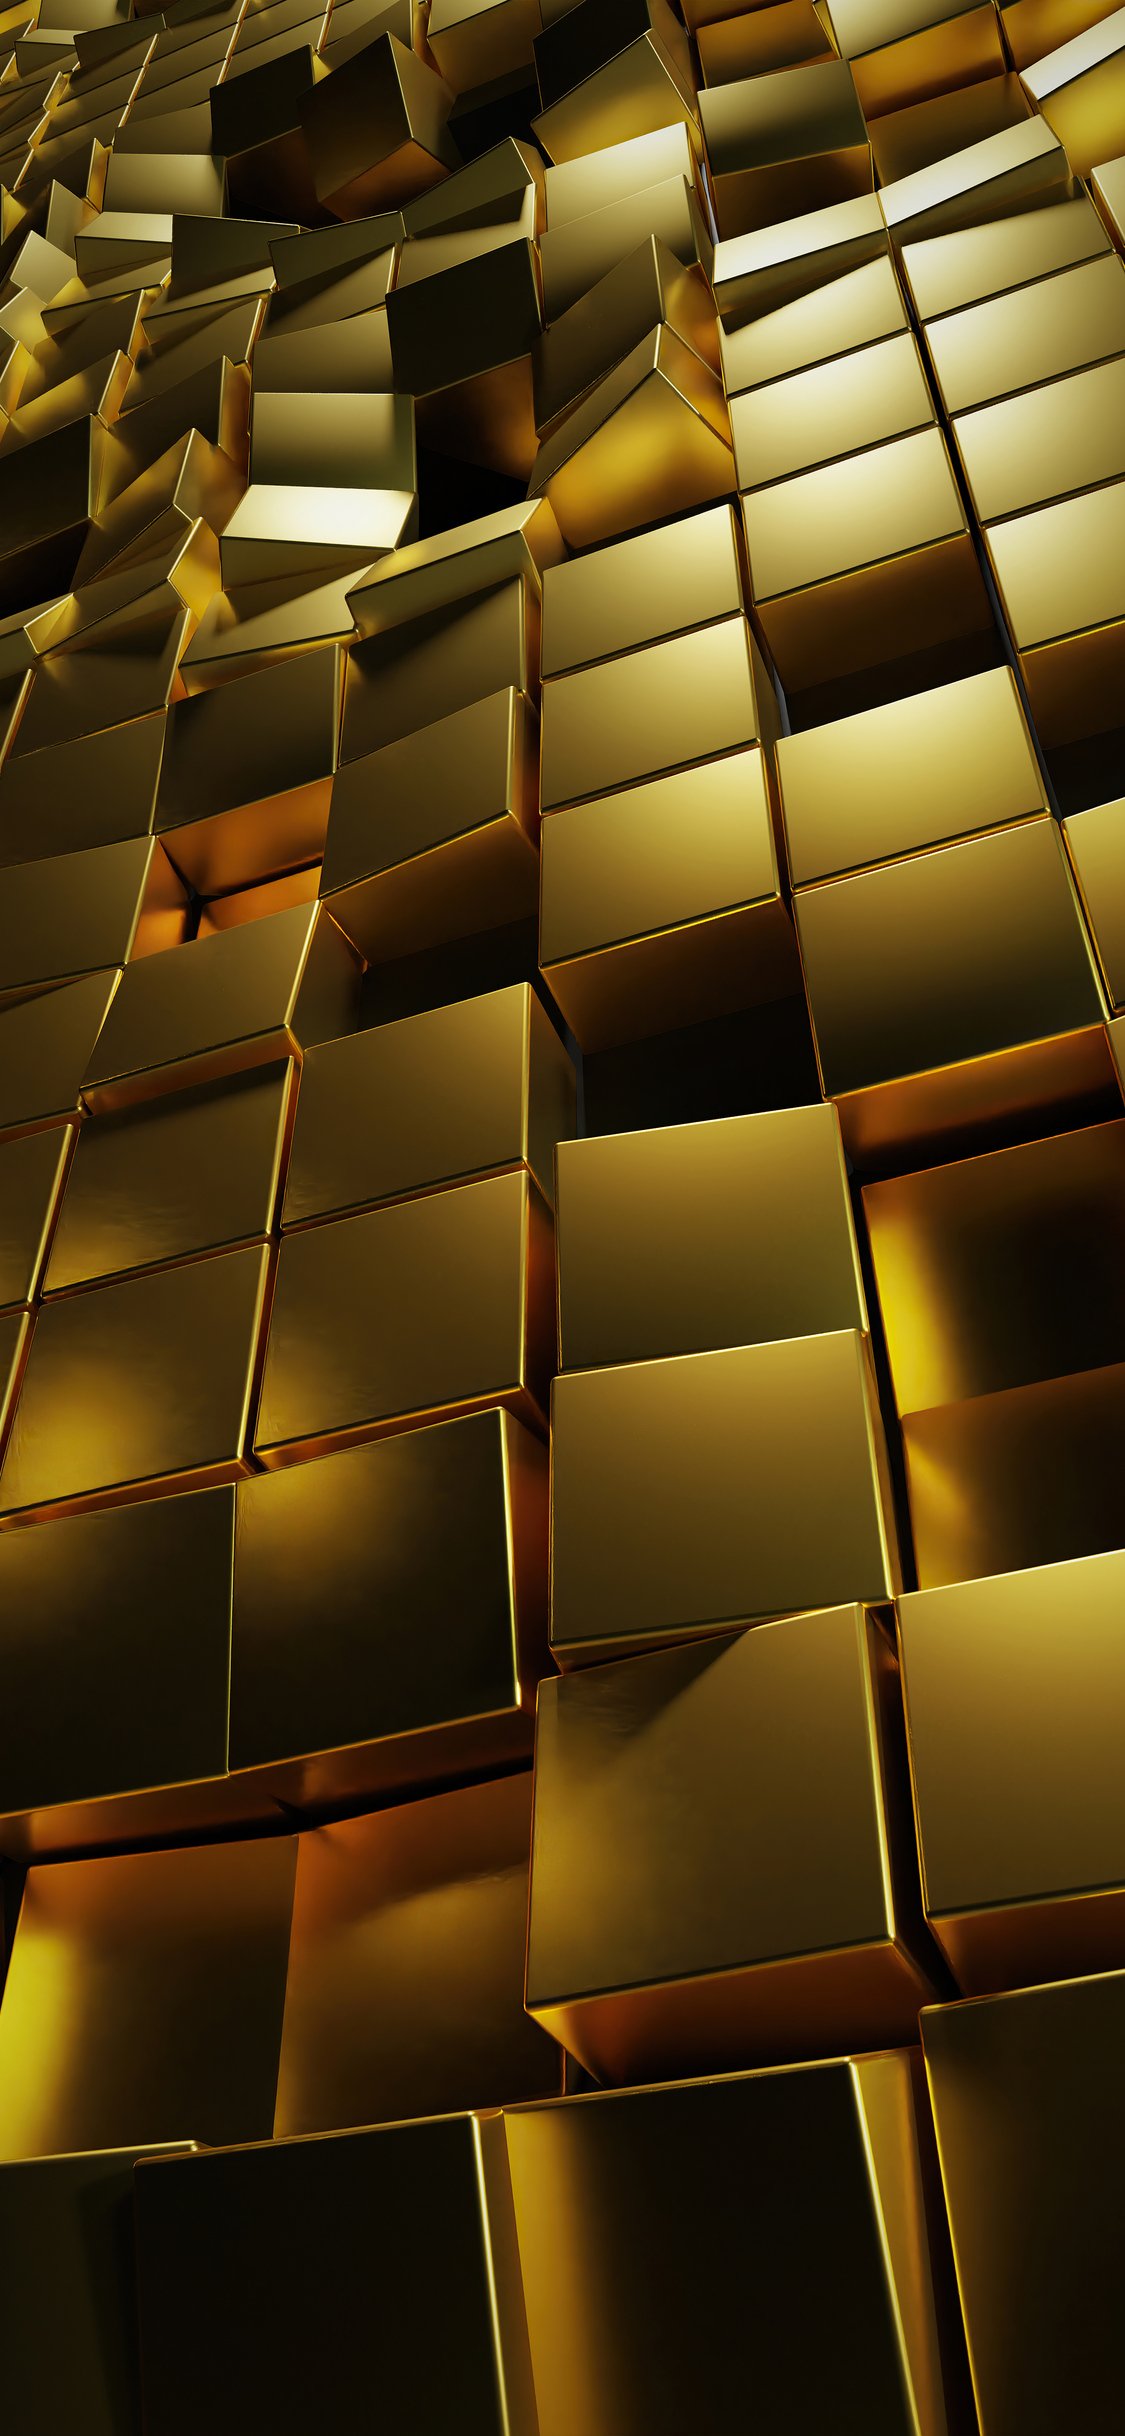 Gold 3D Cubes 4k iPhone XS